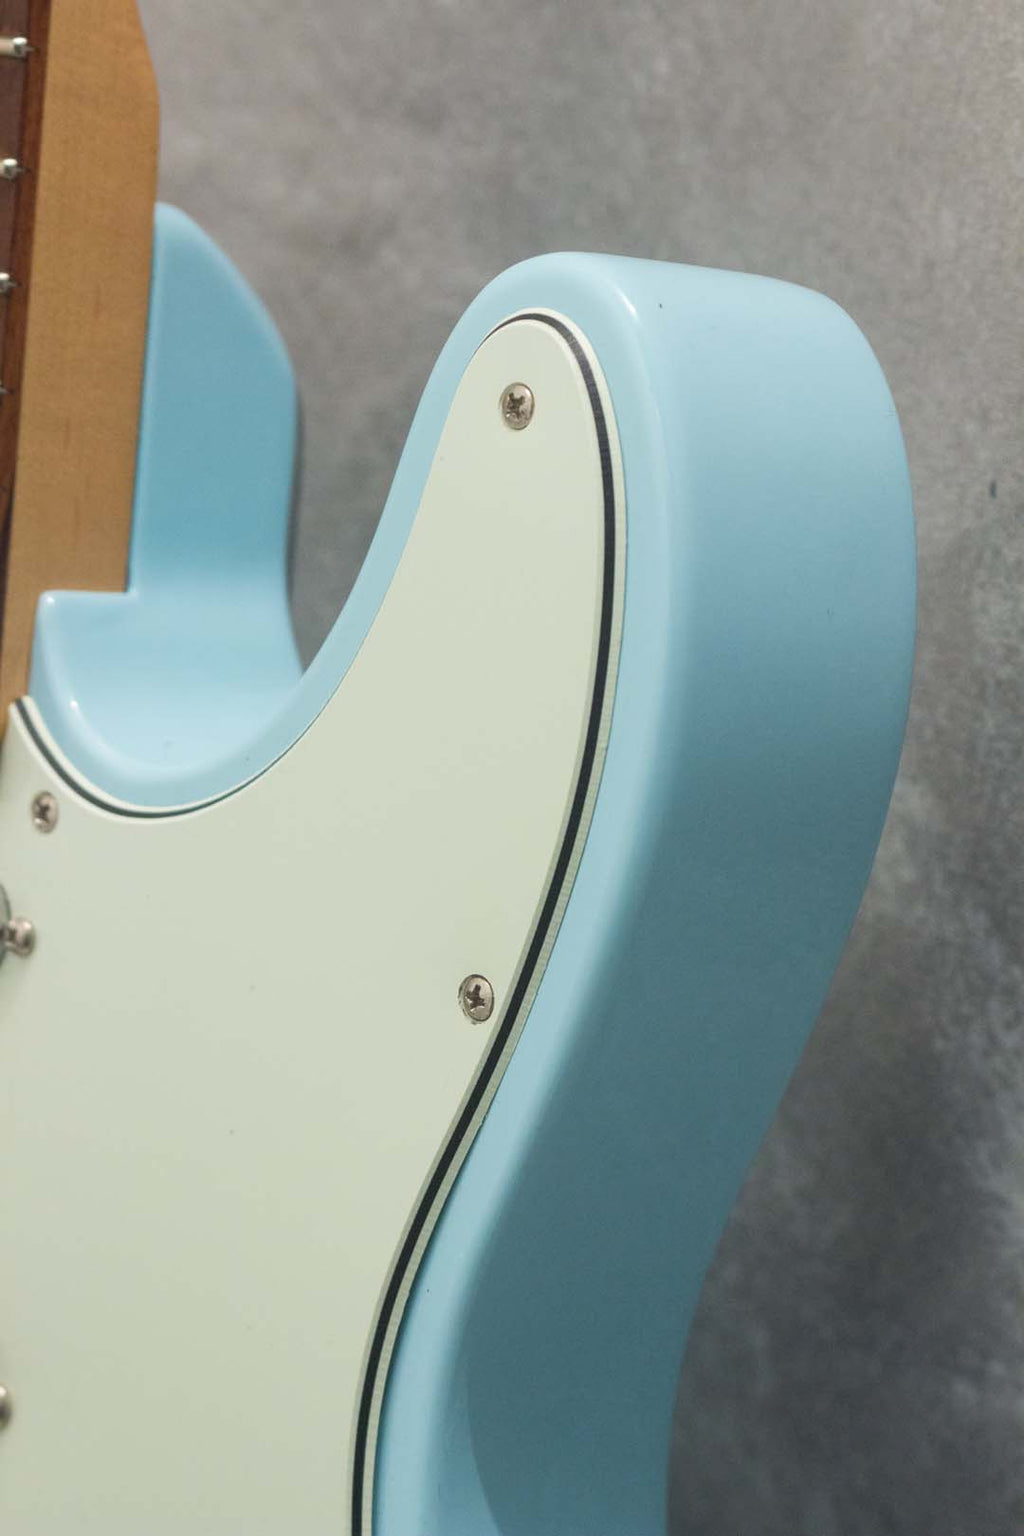 Fender Deluxe Nashville Telecaster Daphne Blue 2018